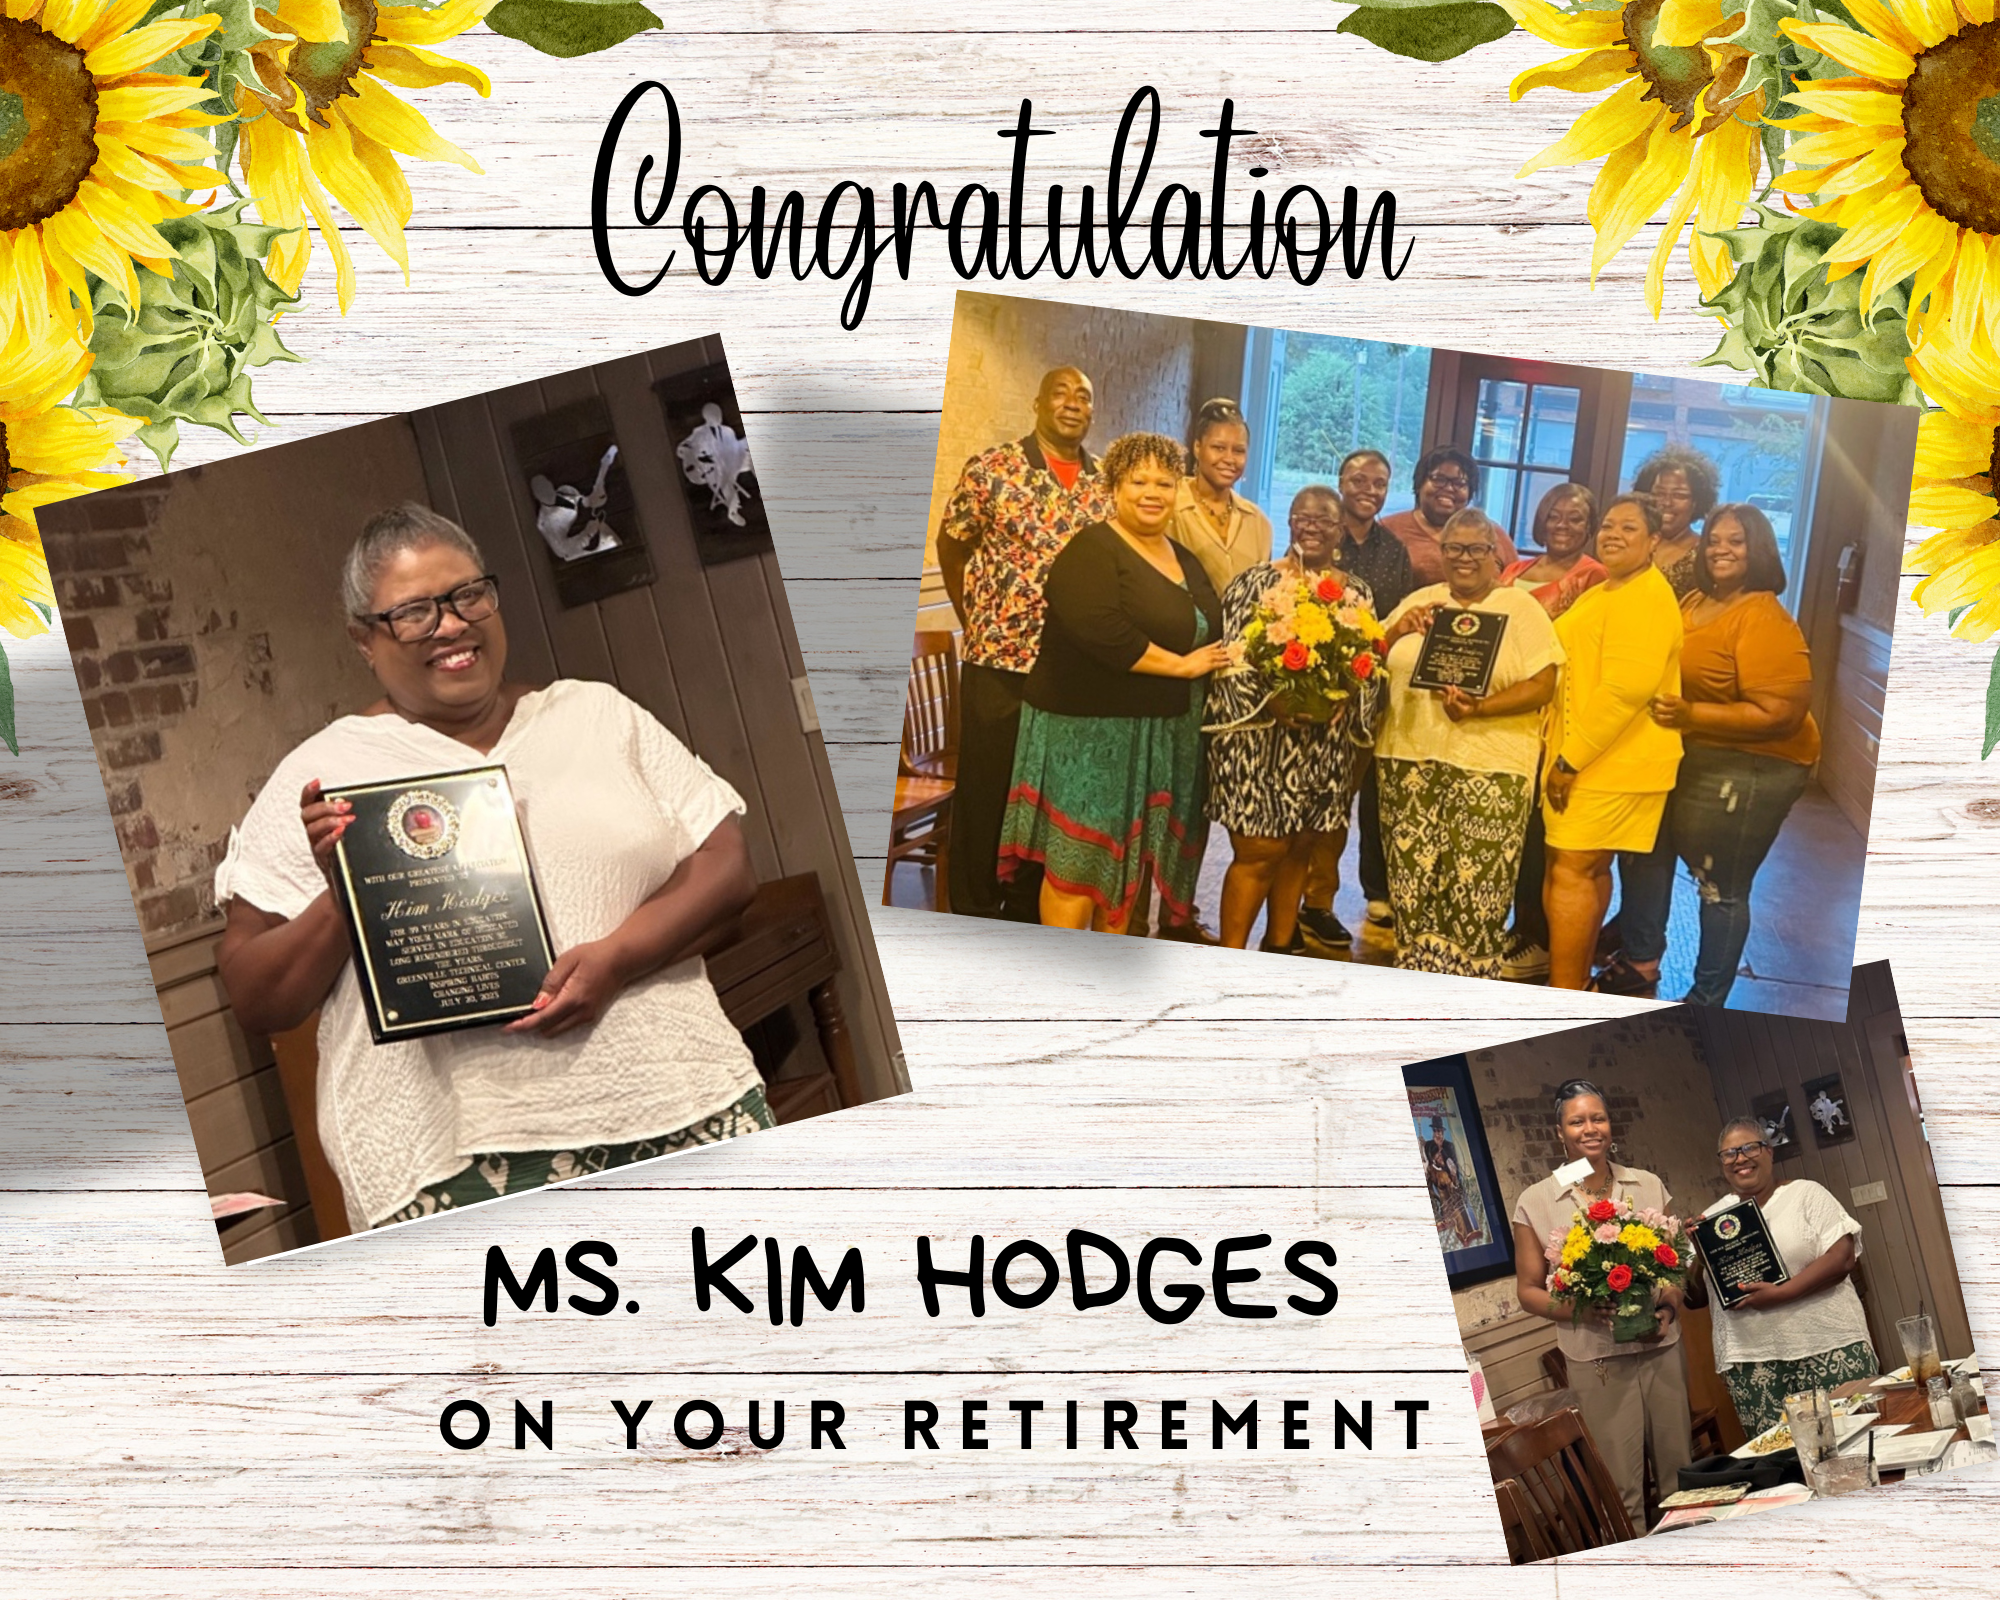 Congratulations Ms. Kim Hodges on your retirement